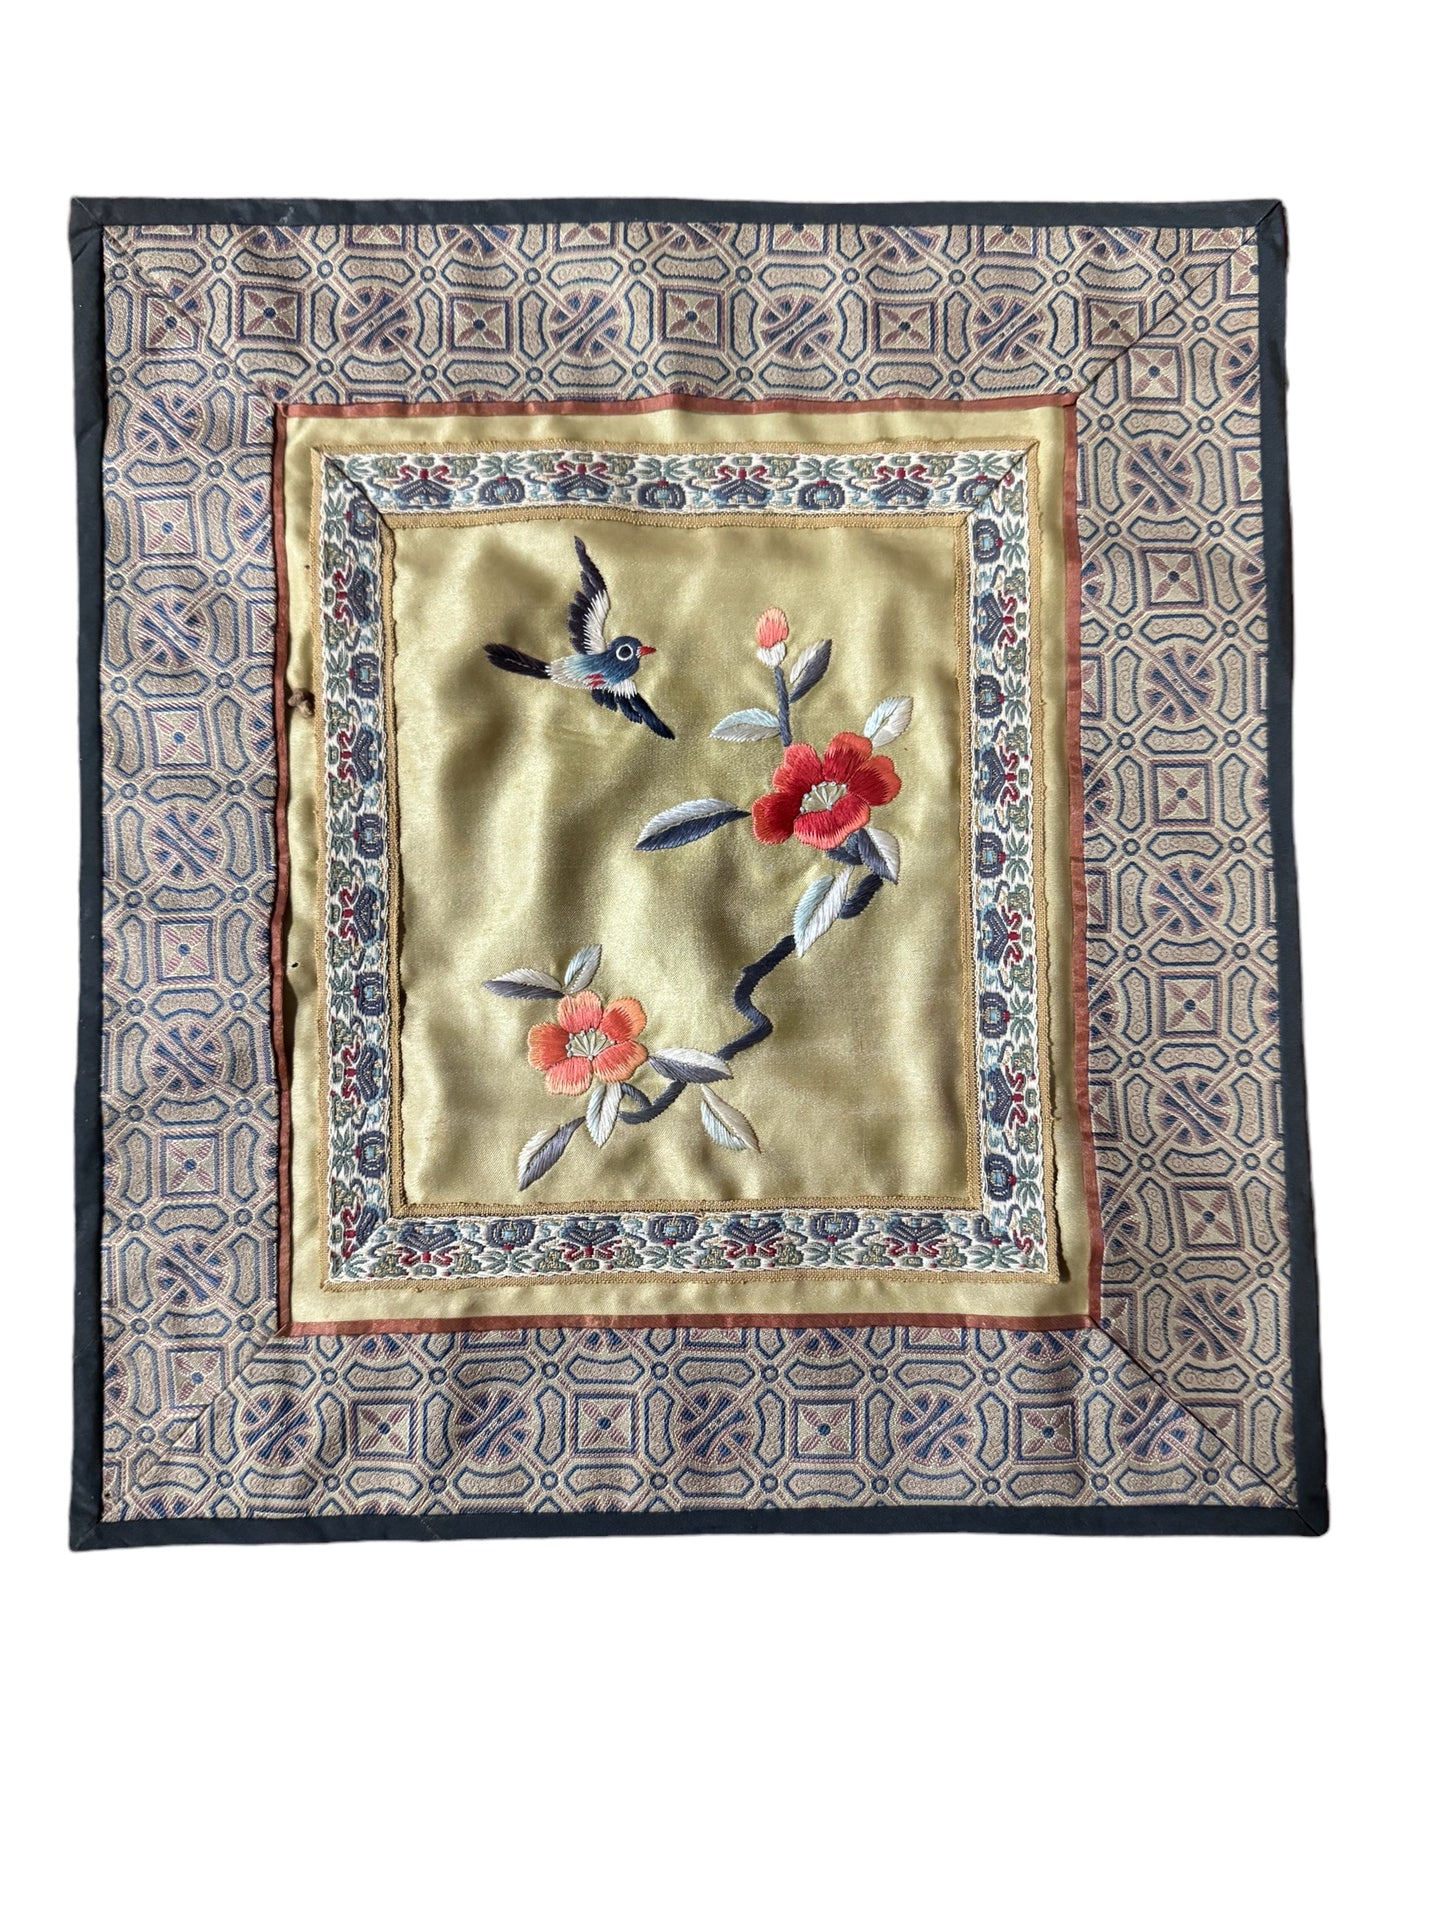 Vintage Asian Silk textiles